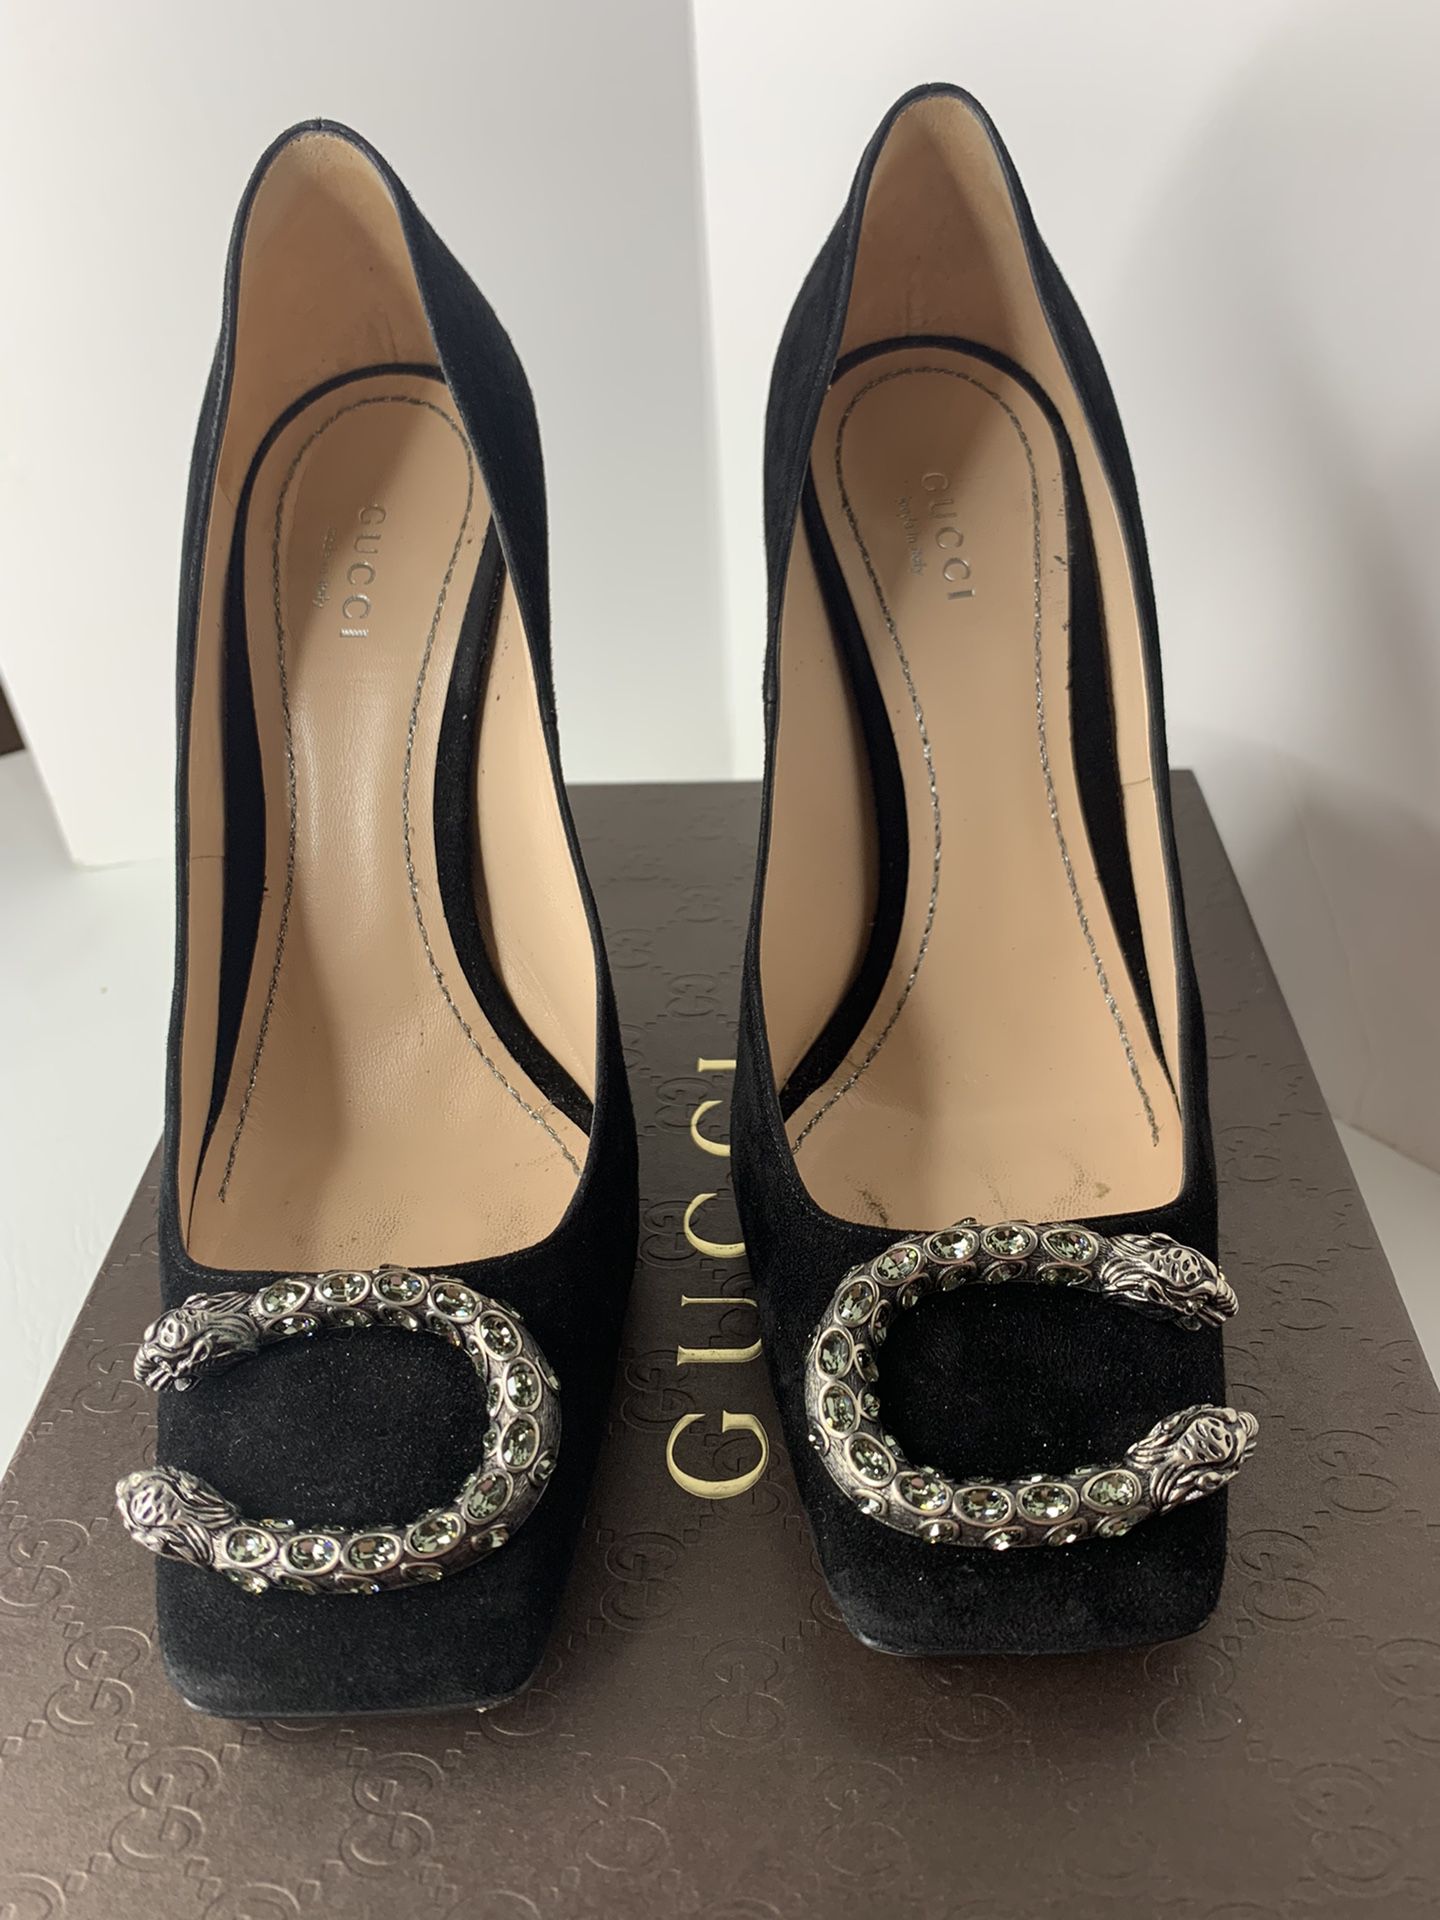 Gucci Dionysus black suede embellished pumps 37.5 / 7.5 